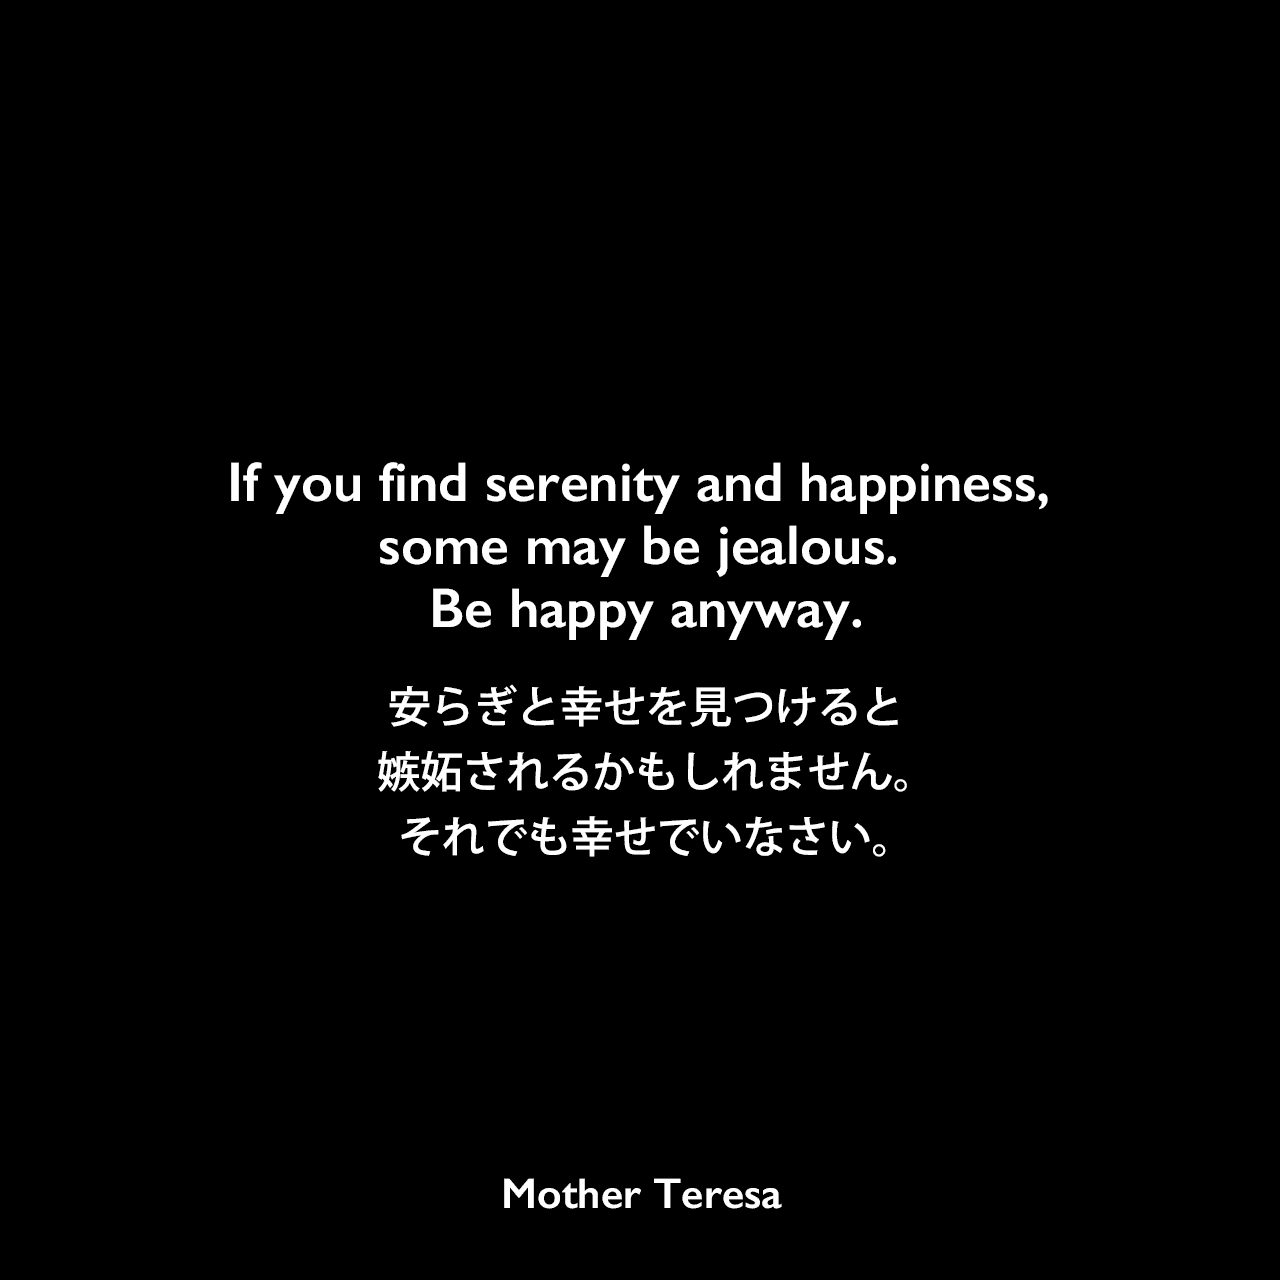 If you find serenity and happiness, some may be jealous. Be happy anyway.安らぎと幸せを見つけると、嫉妬されるかもしれません。それでも幸せでいなさい。Mother Teresa